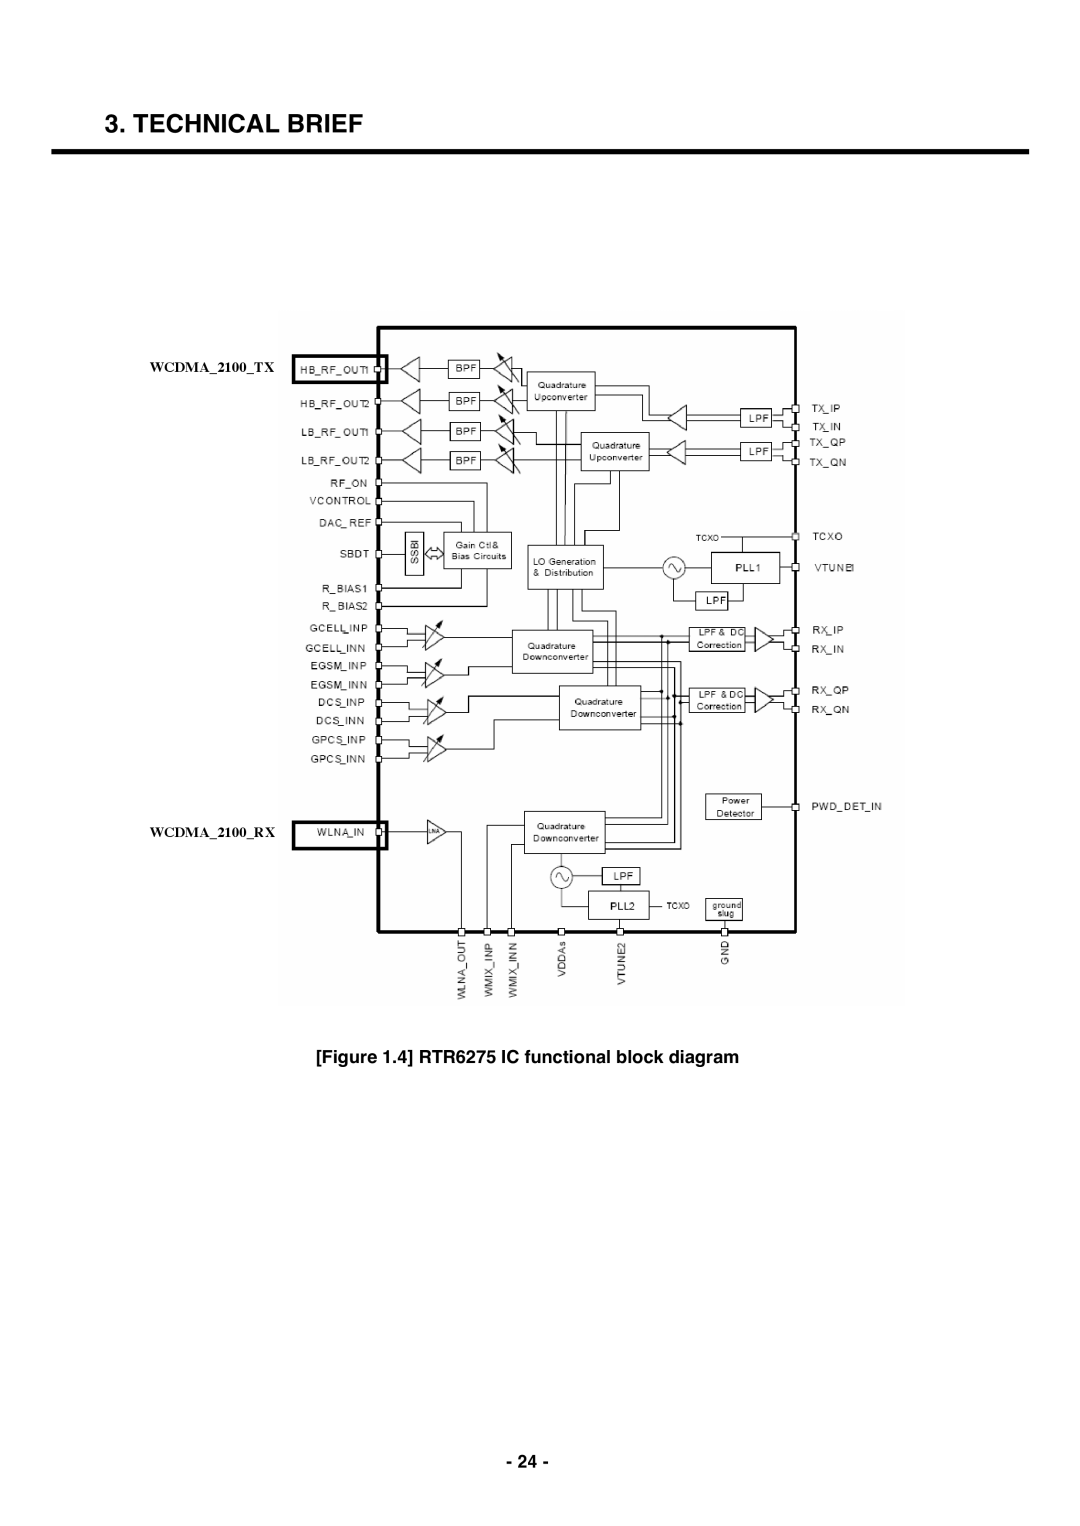 LG Electronics U250 service manual RTR6275 IC functional block diagram 